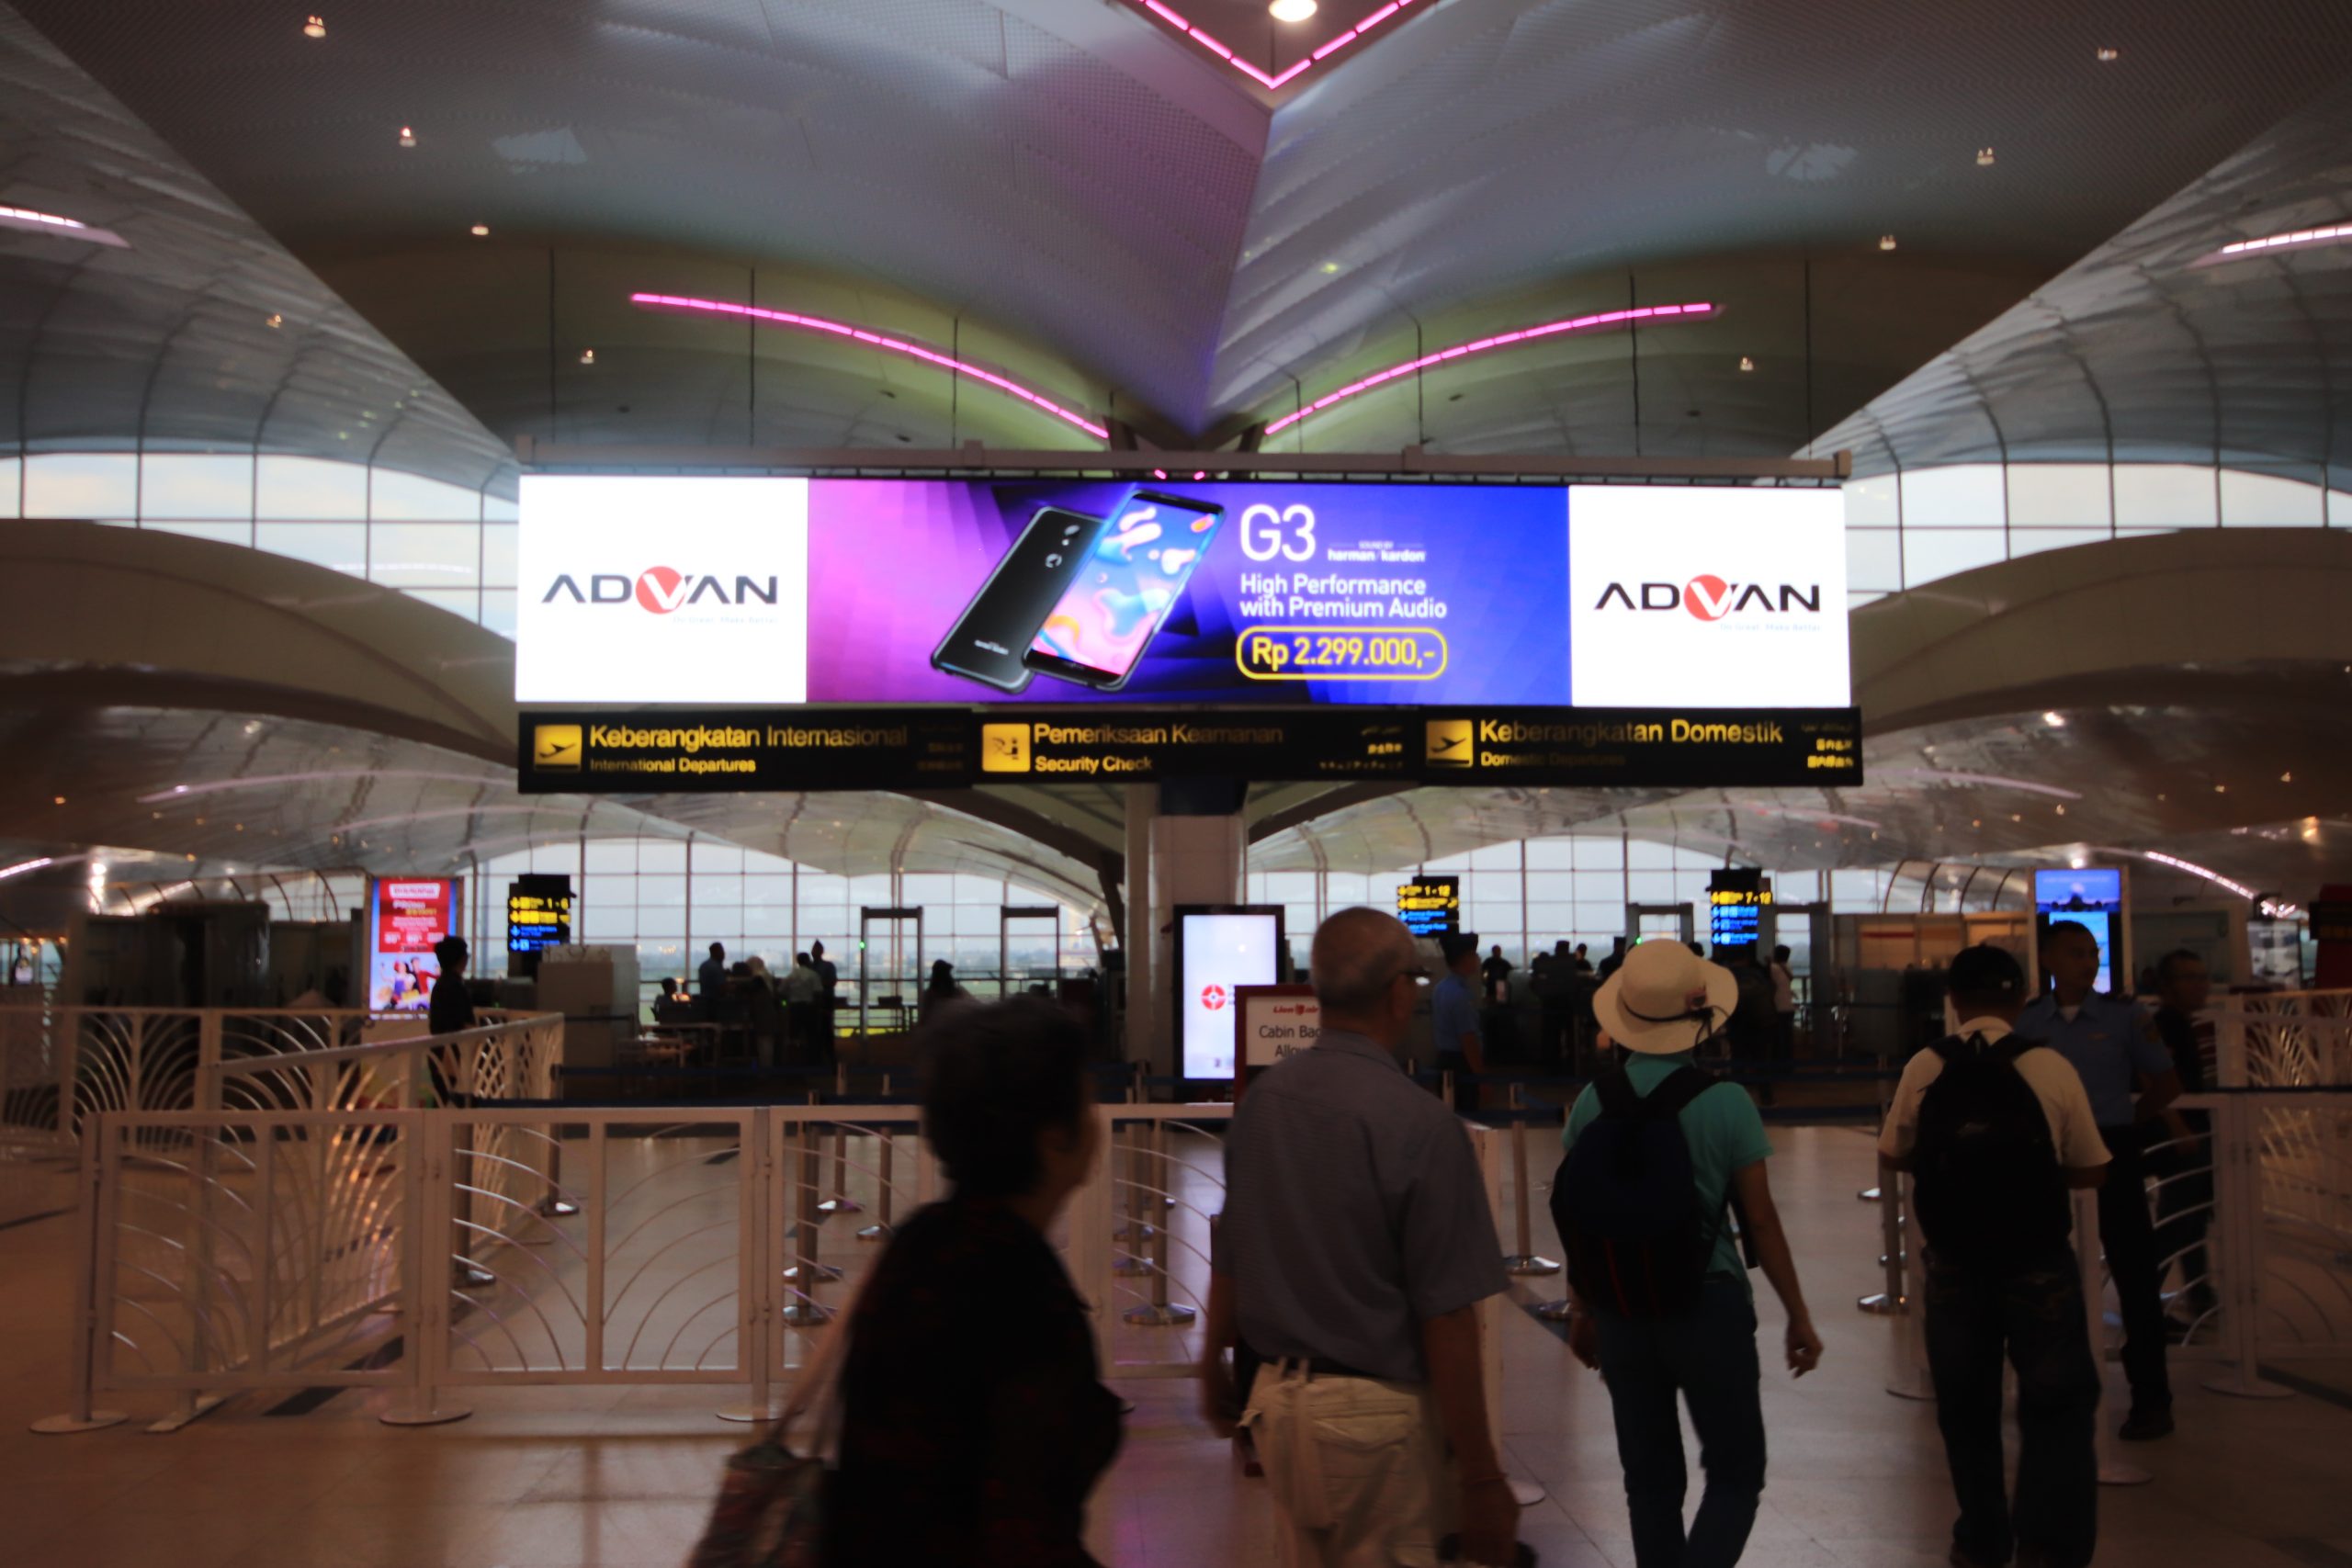 Giant LED Screen Advan di security checkpoint keberangkatan Bandara Internasional Kualanamu Medan